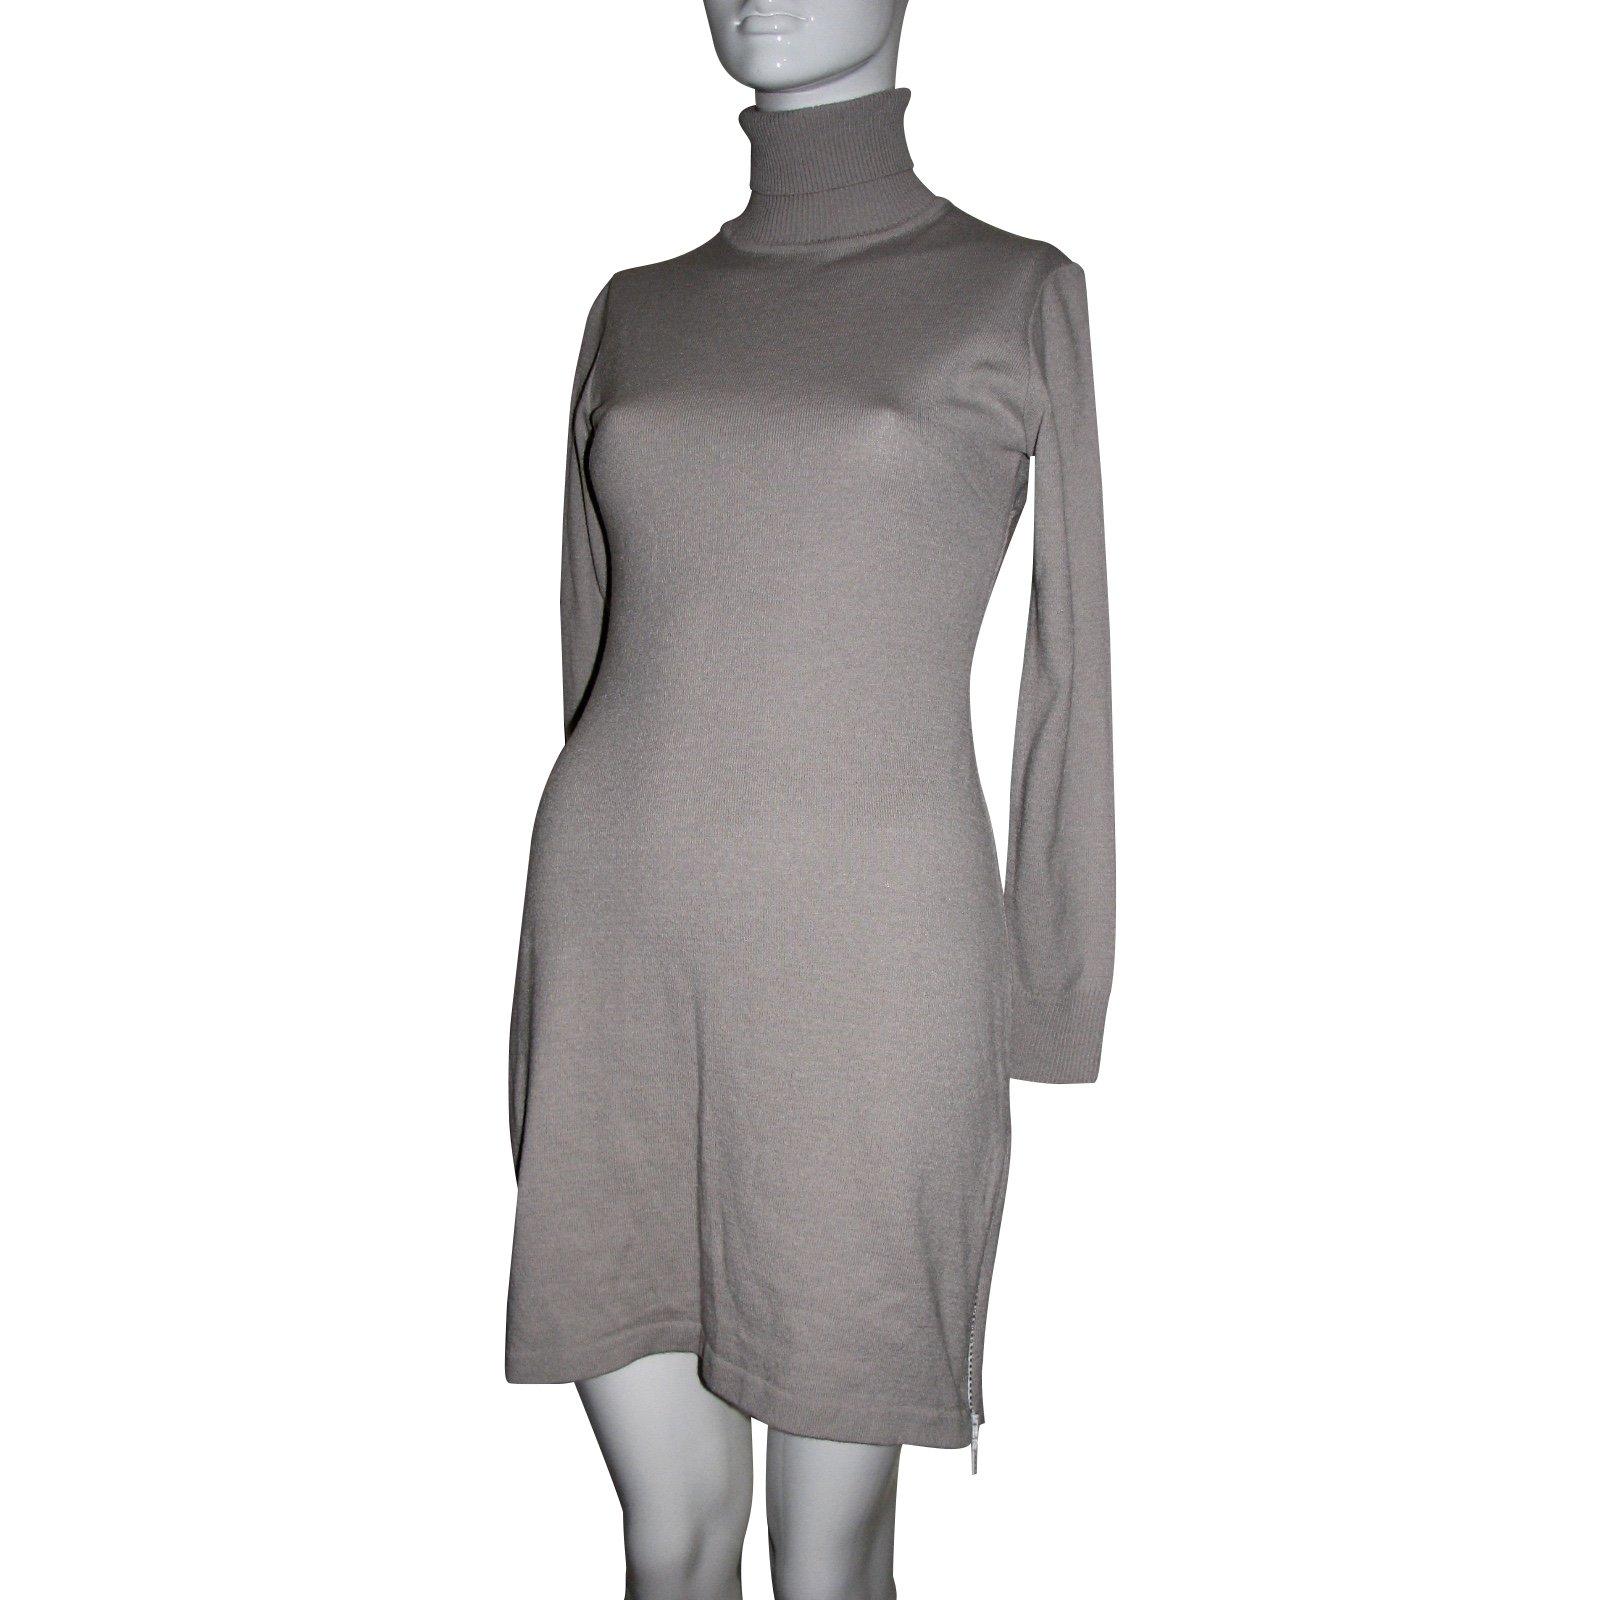 grey turtle neck jumper dress